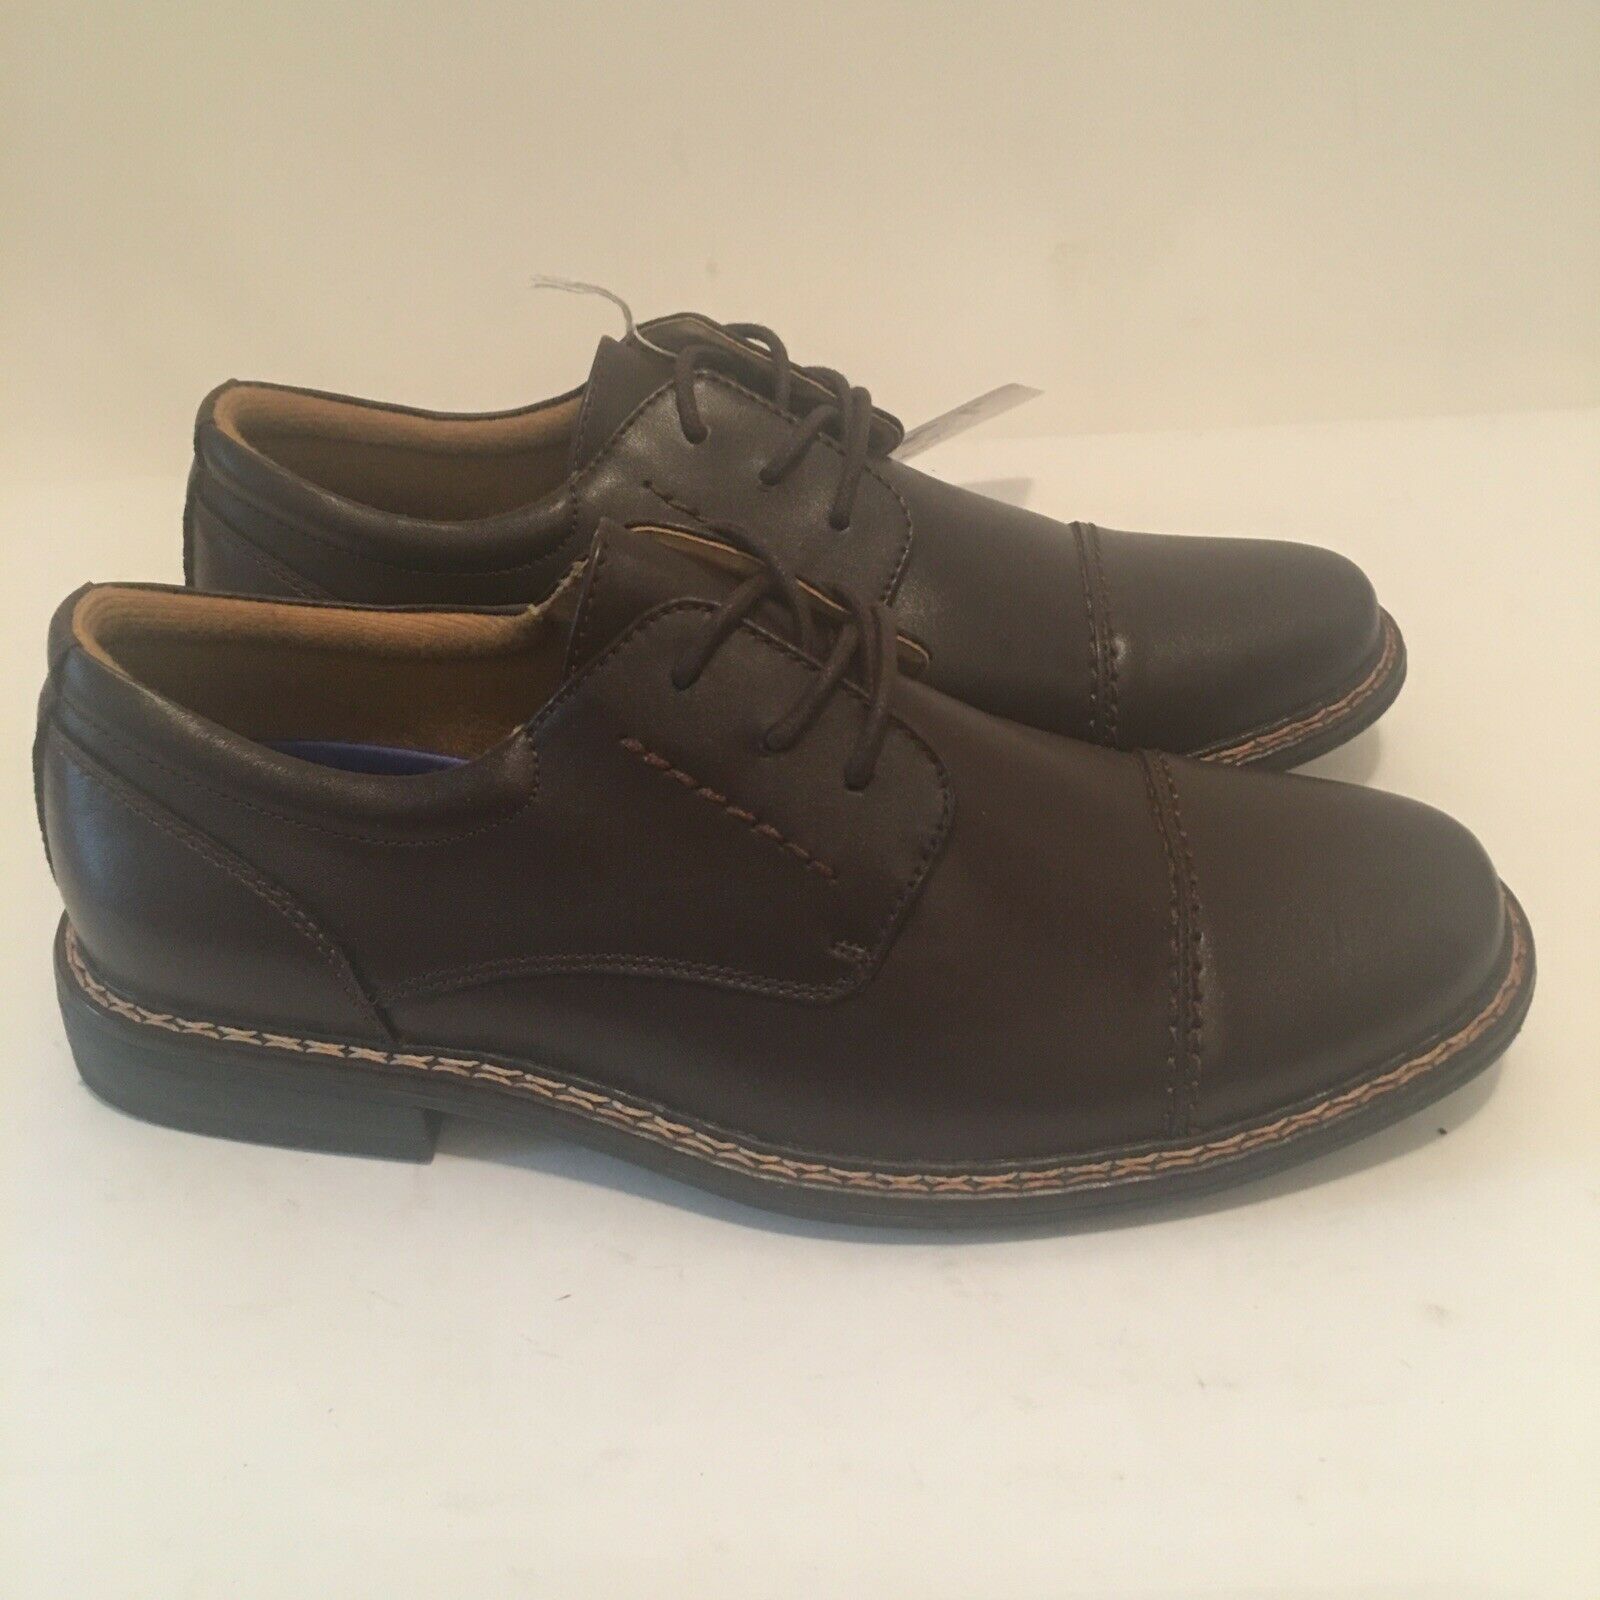 Dr. Scholls Mens Dress Shoes Size 8.5,Brown Leather Upper,Cap Toe, Lace Up